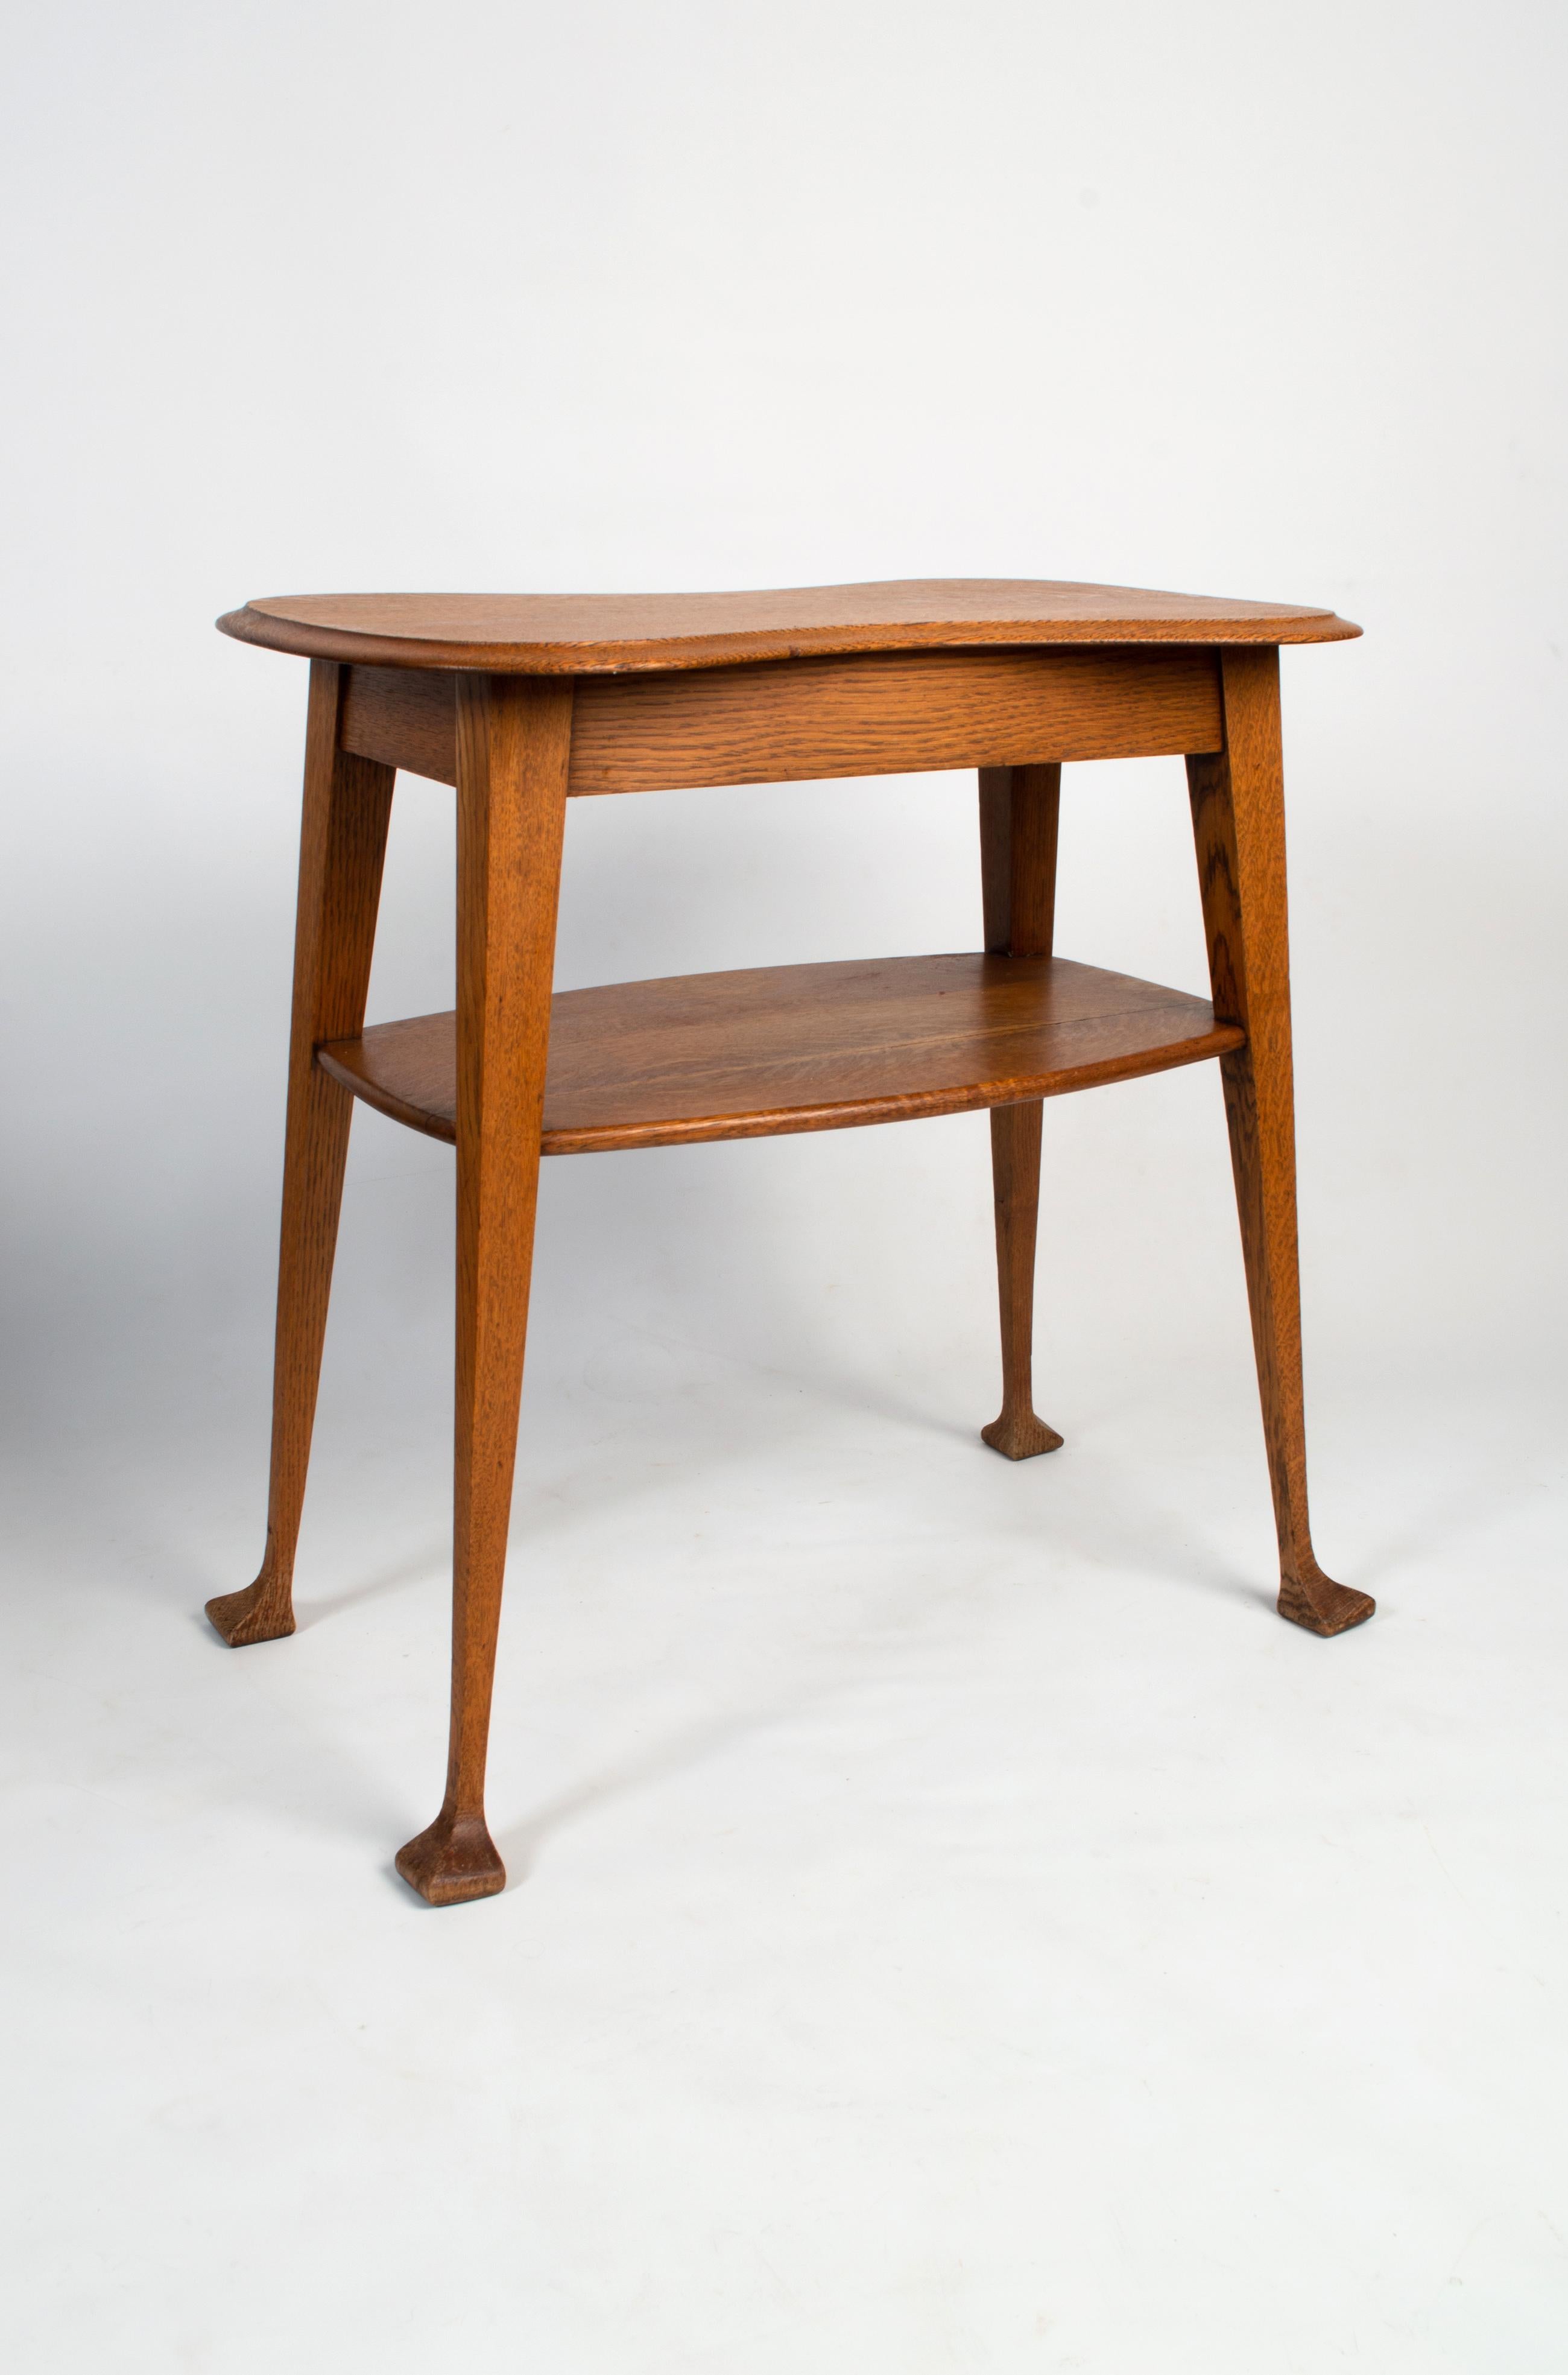 Antique English Shapland & Petter Arts & Crafts Golden Oak Side Table C.1890 For Sale 1